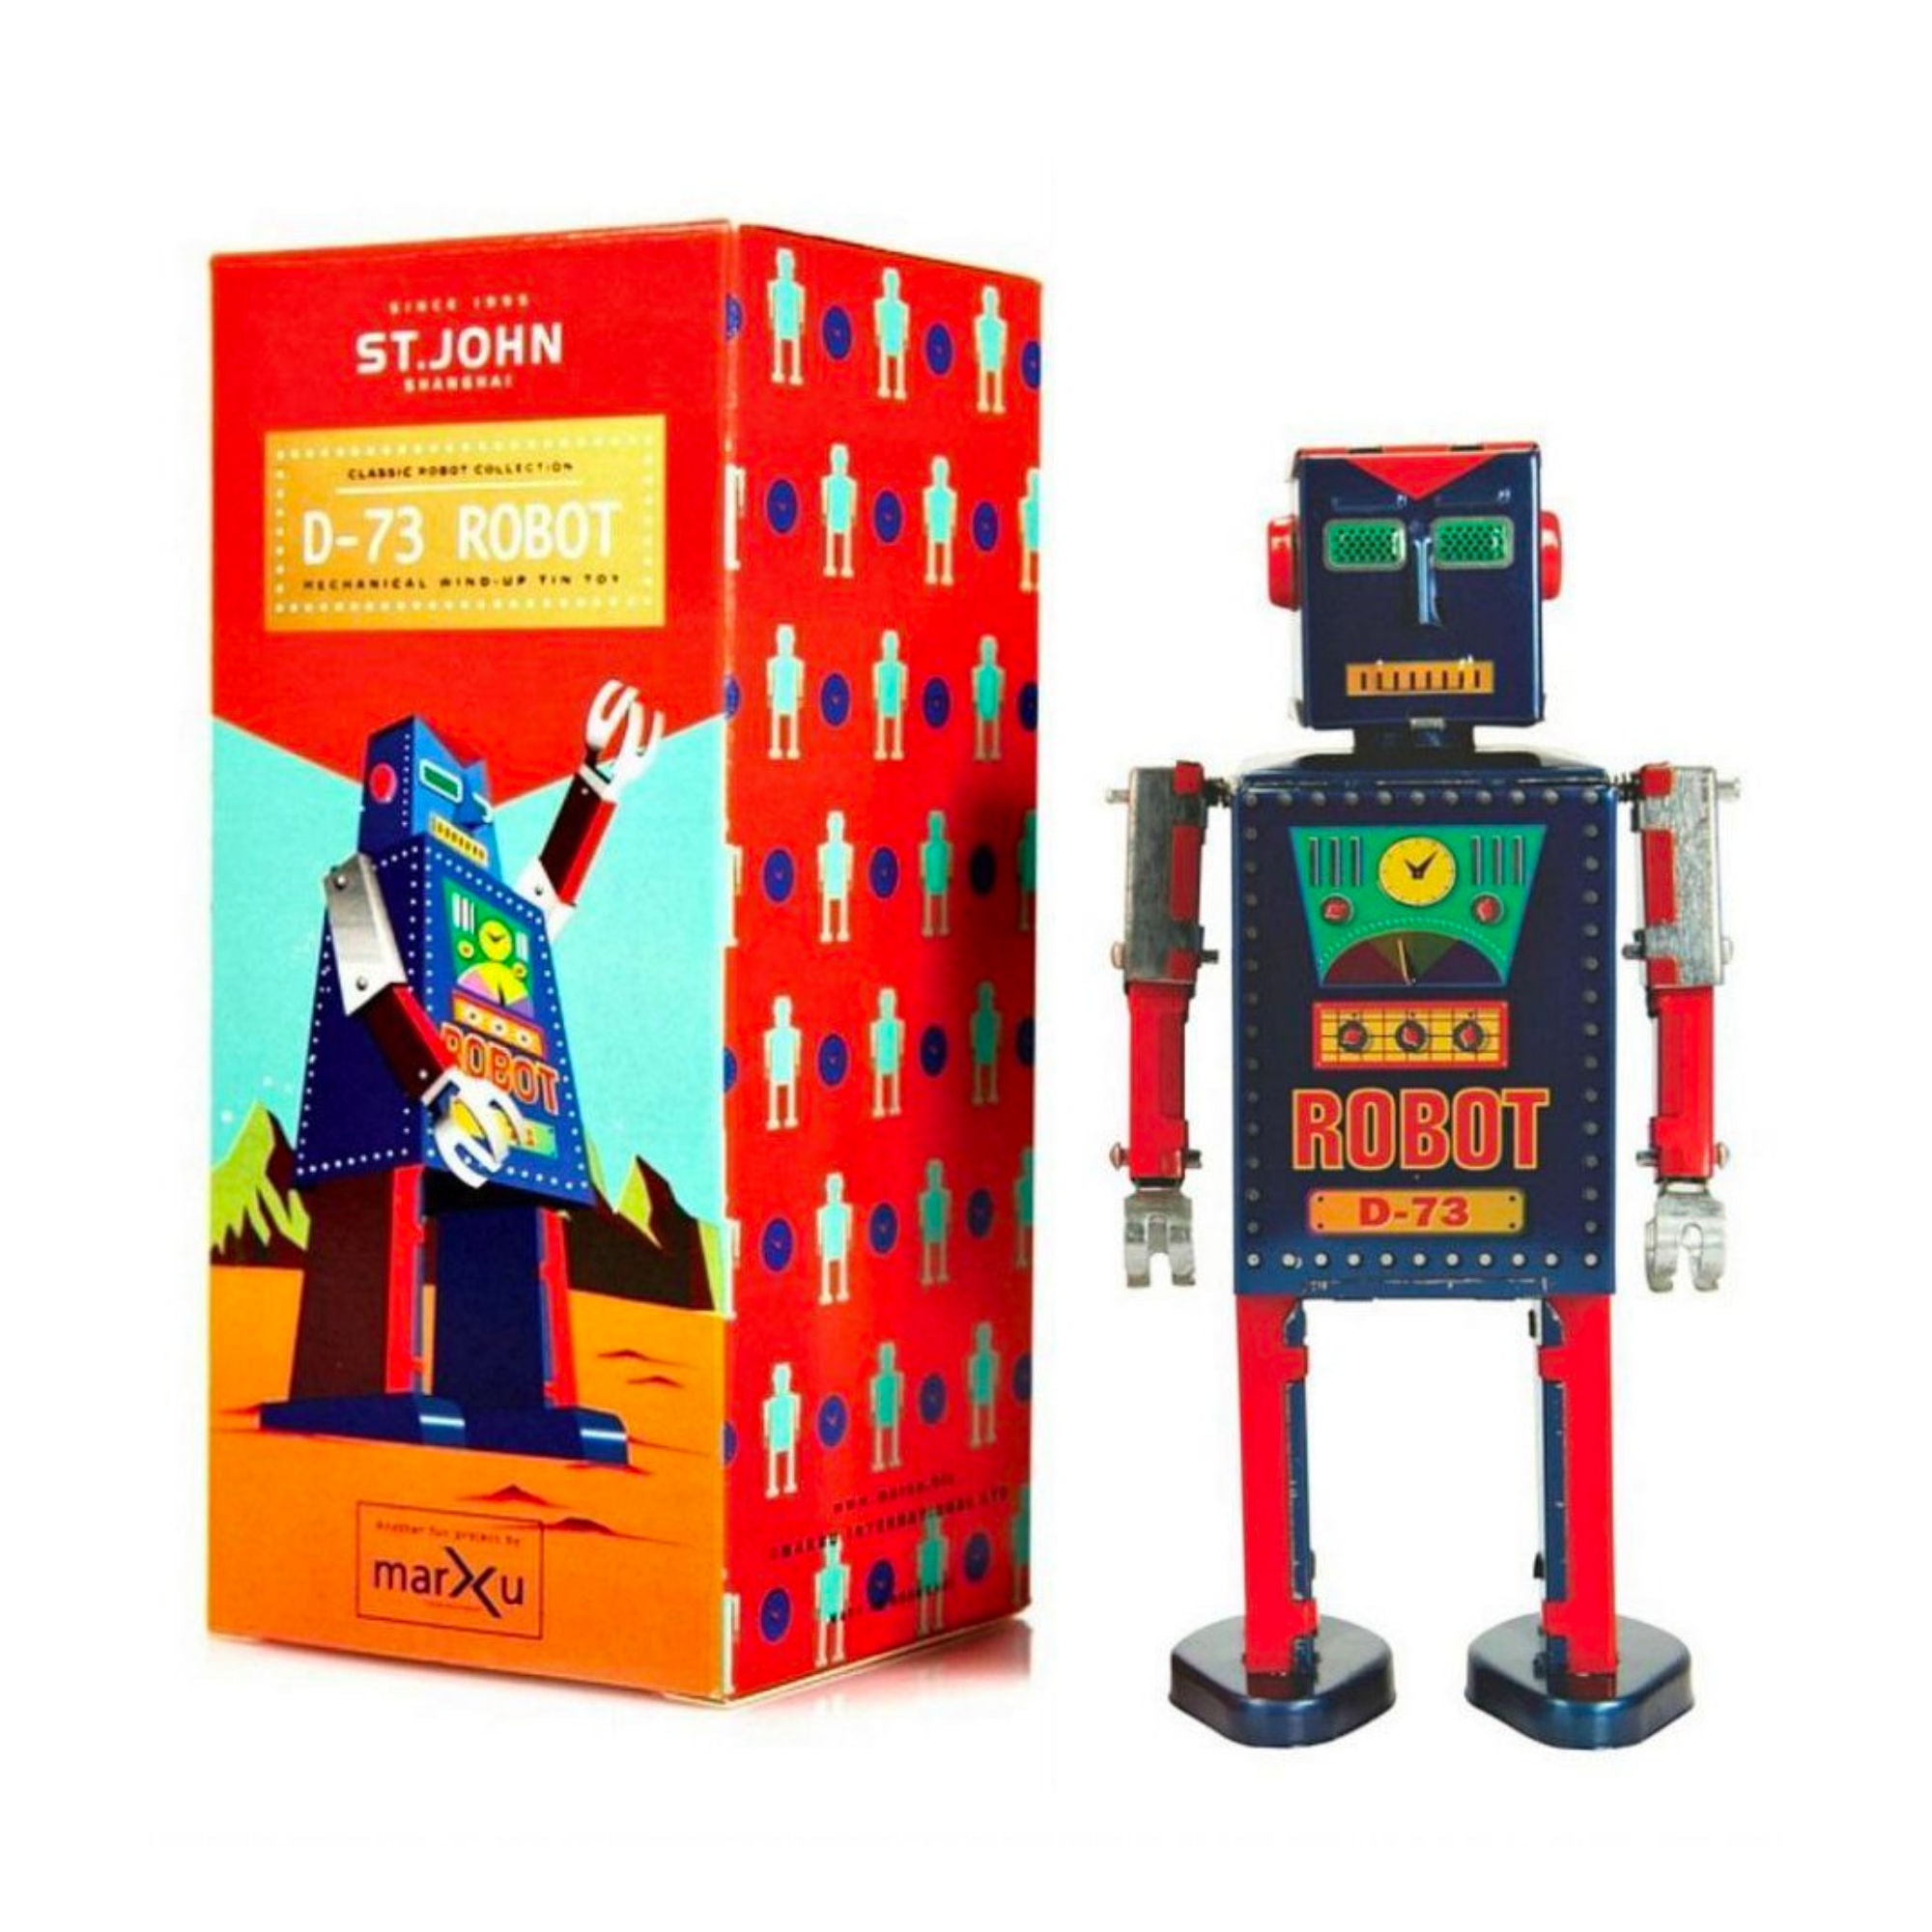 Saint John Robot D-73 Windup Toy